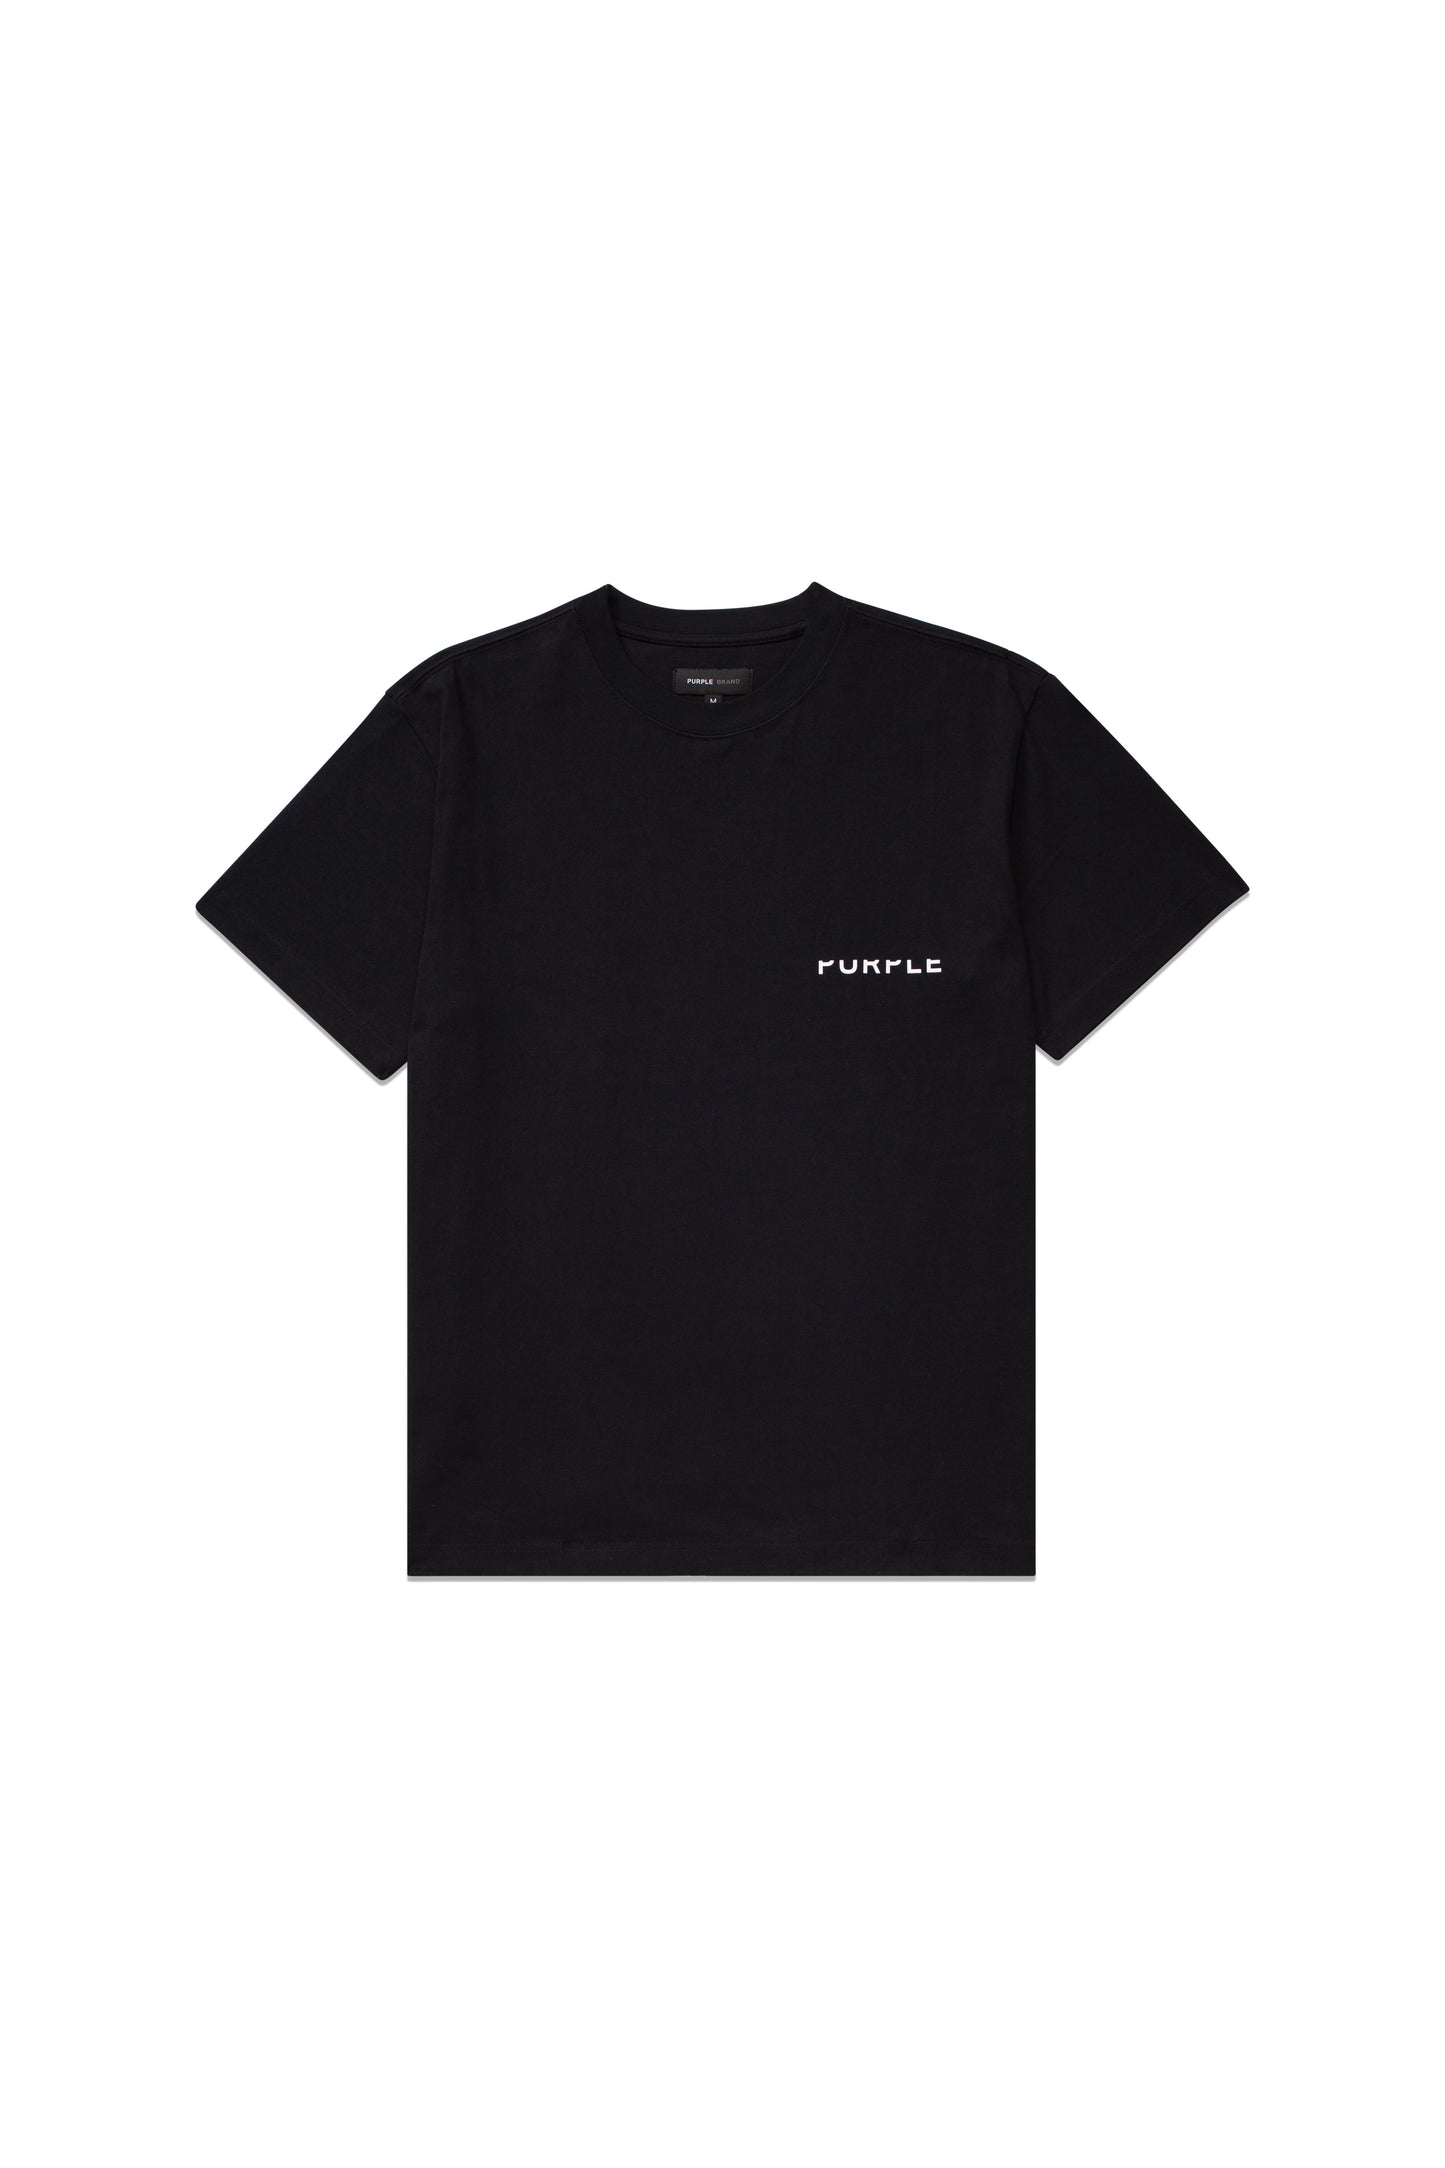 Cut Wordmark Black Beauty T-Shirt